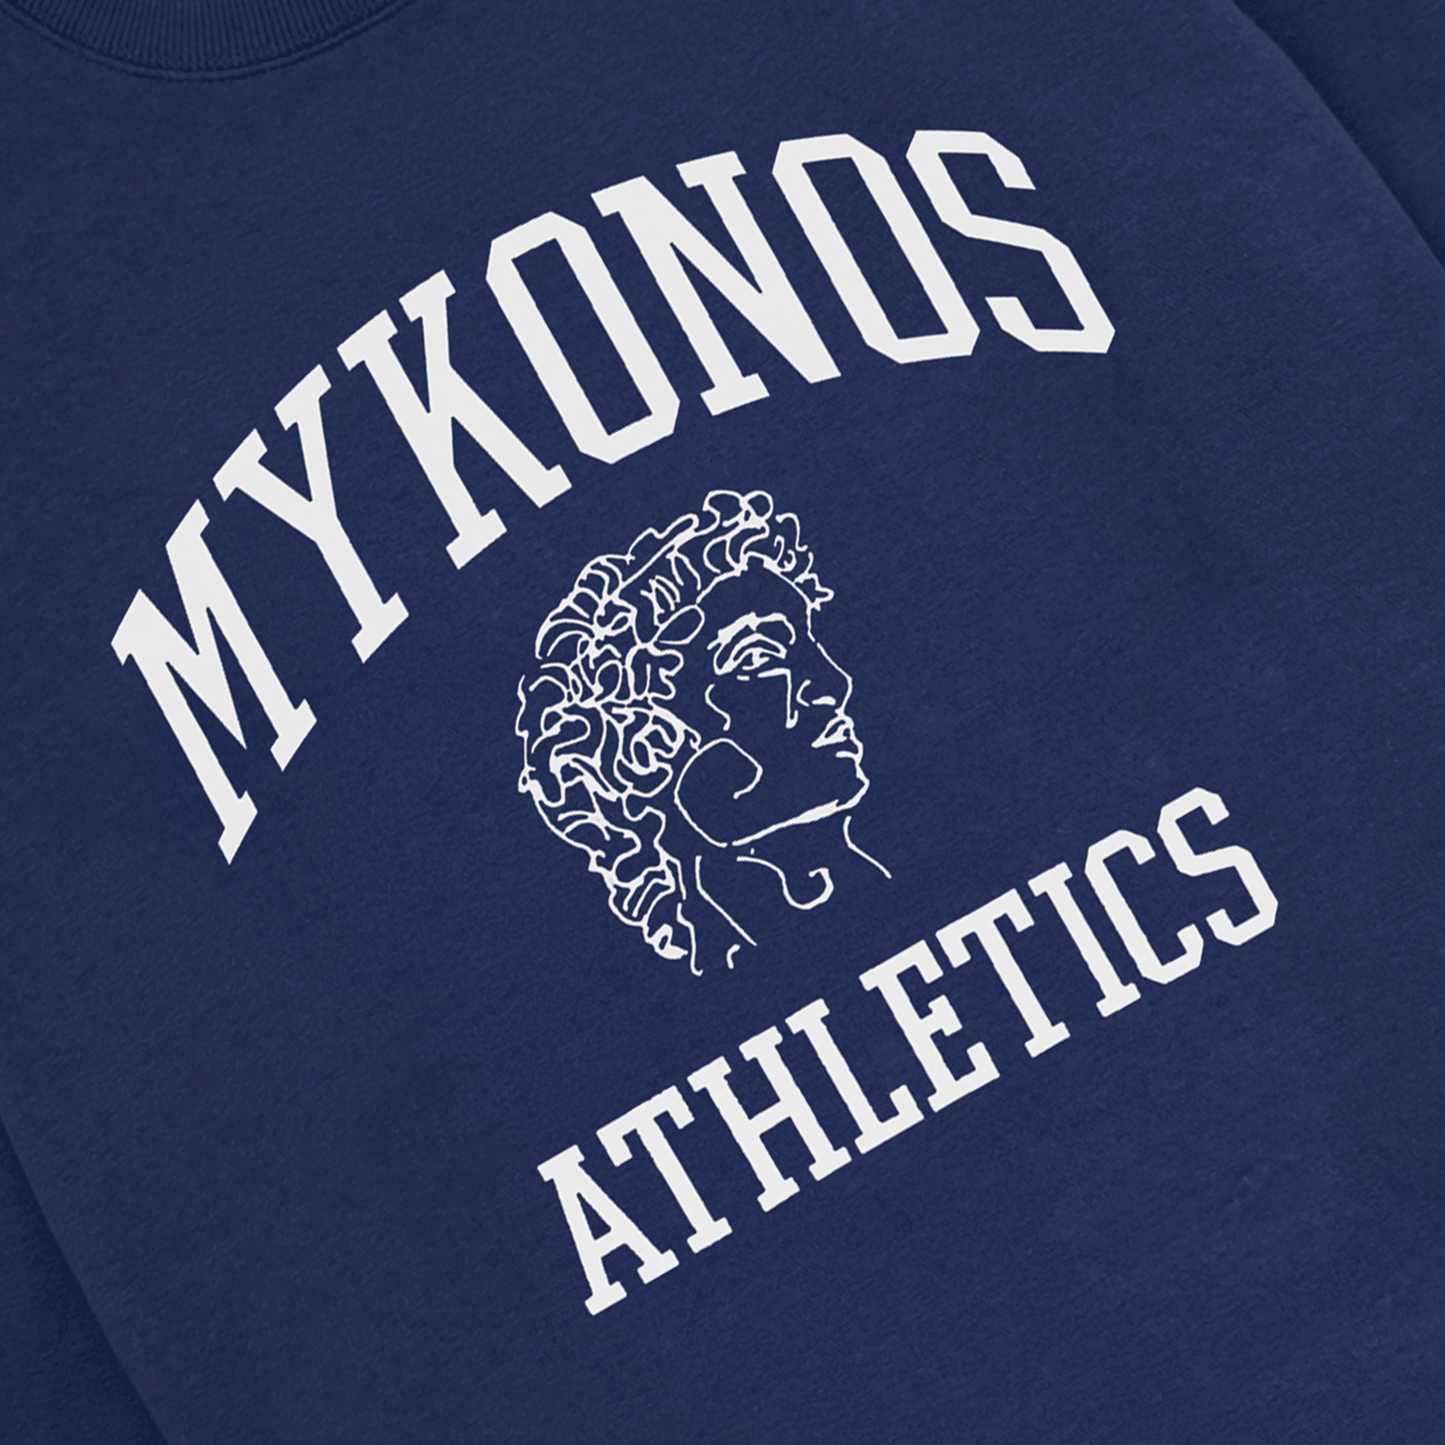 Mykonos Athletics Club Crewneck Sweatshirt